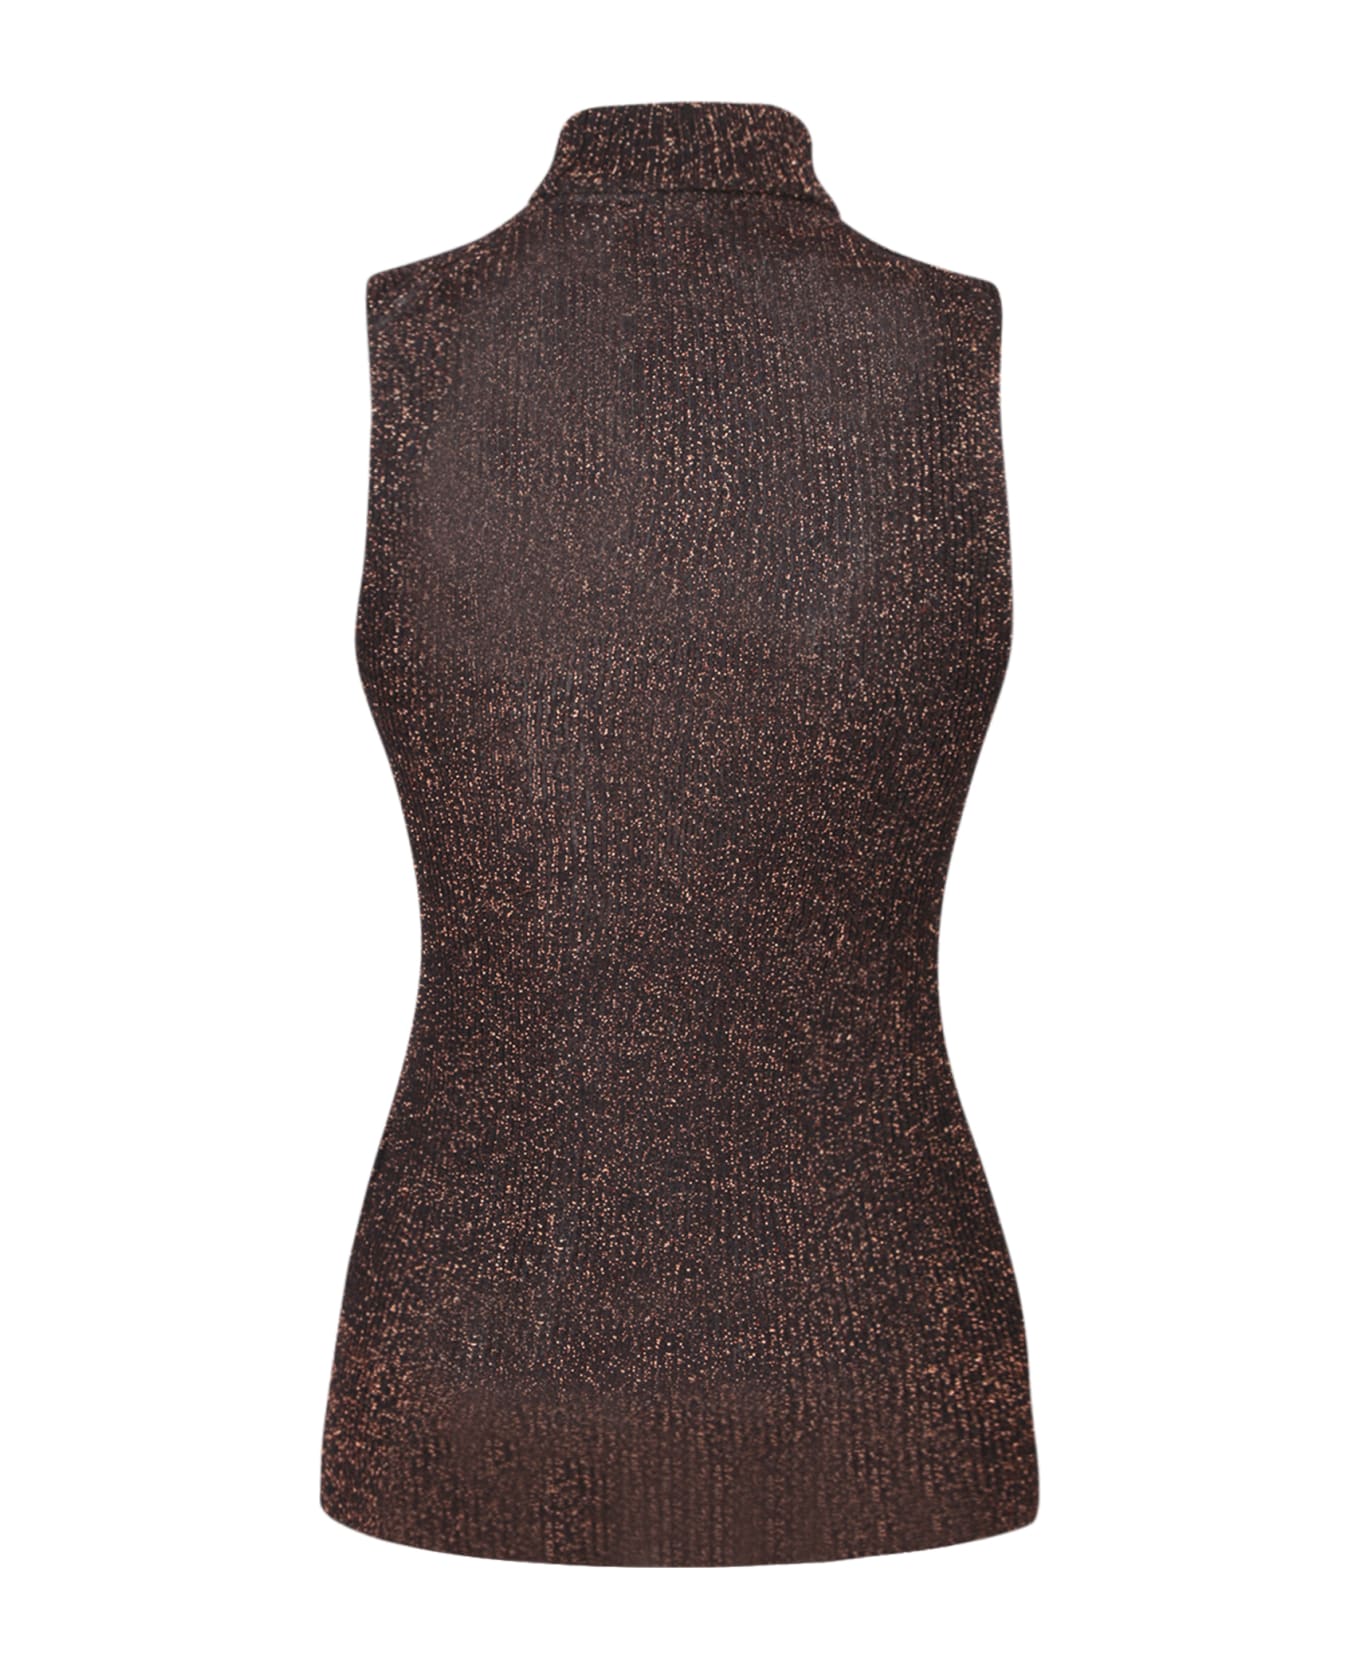 Ganni Knitwear In Brown Polyester - COPPER BROWN